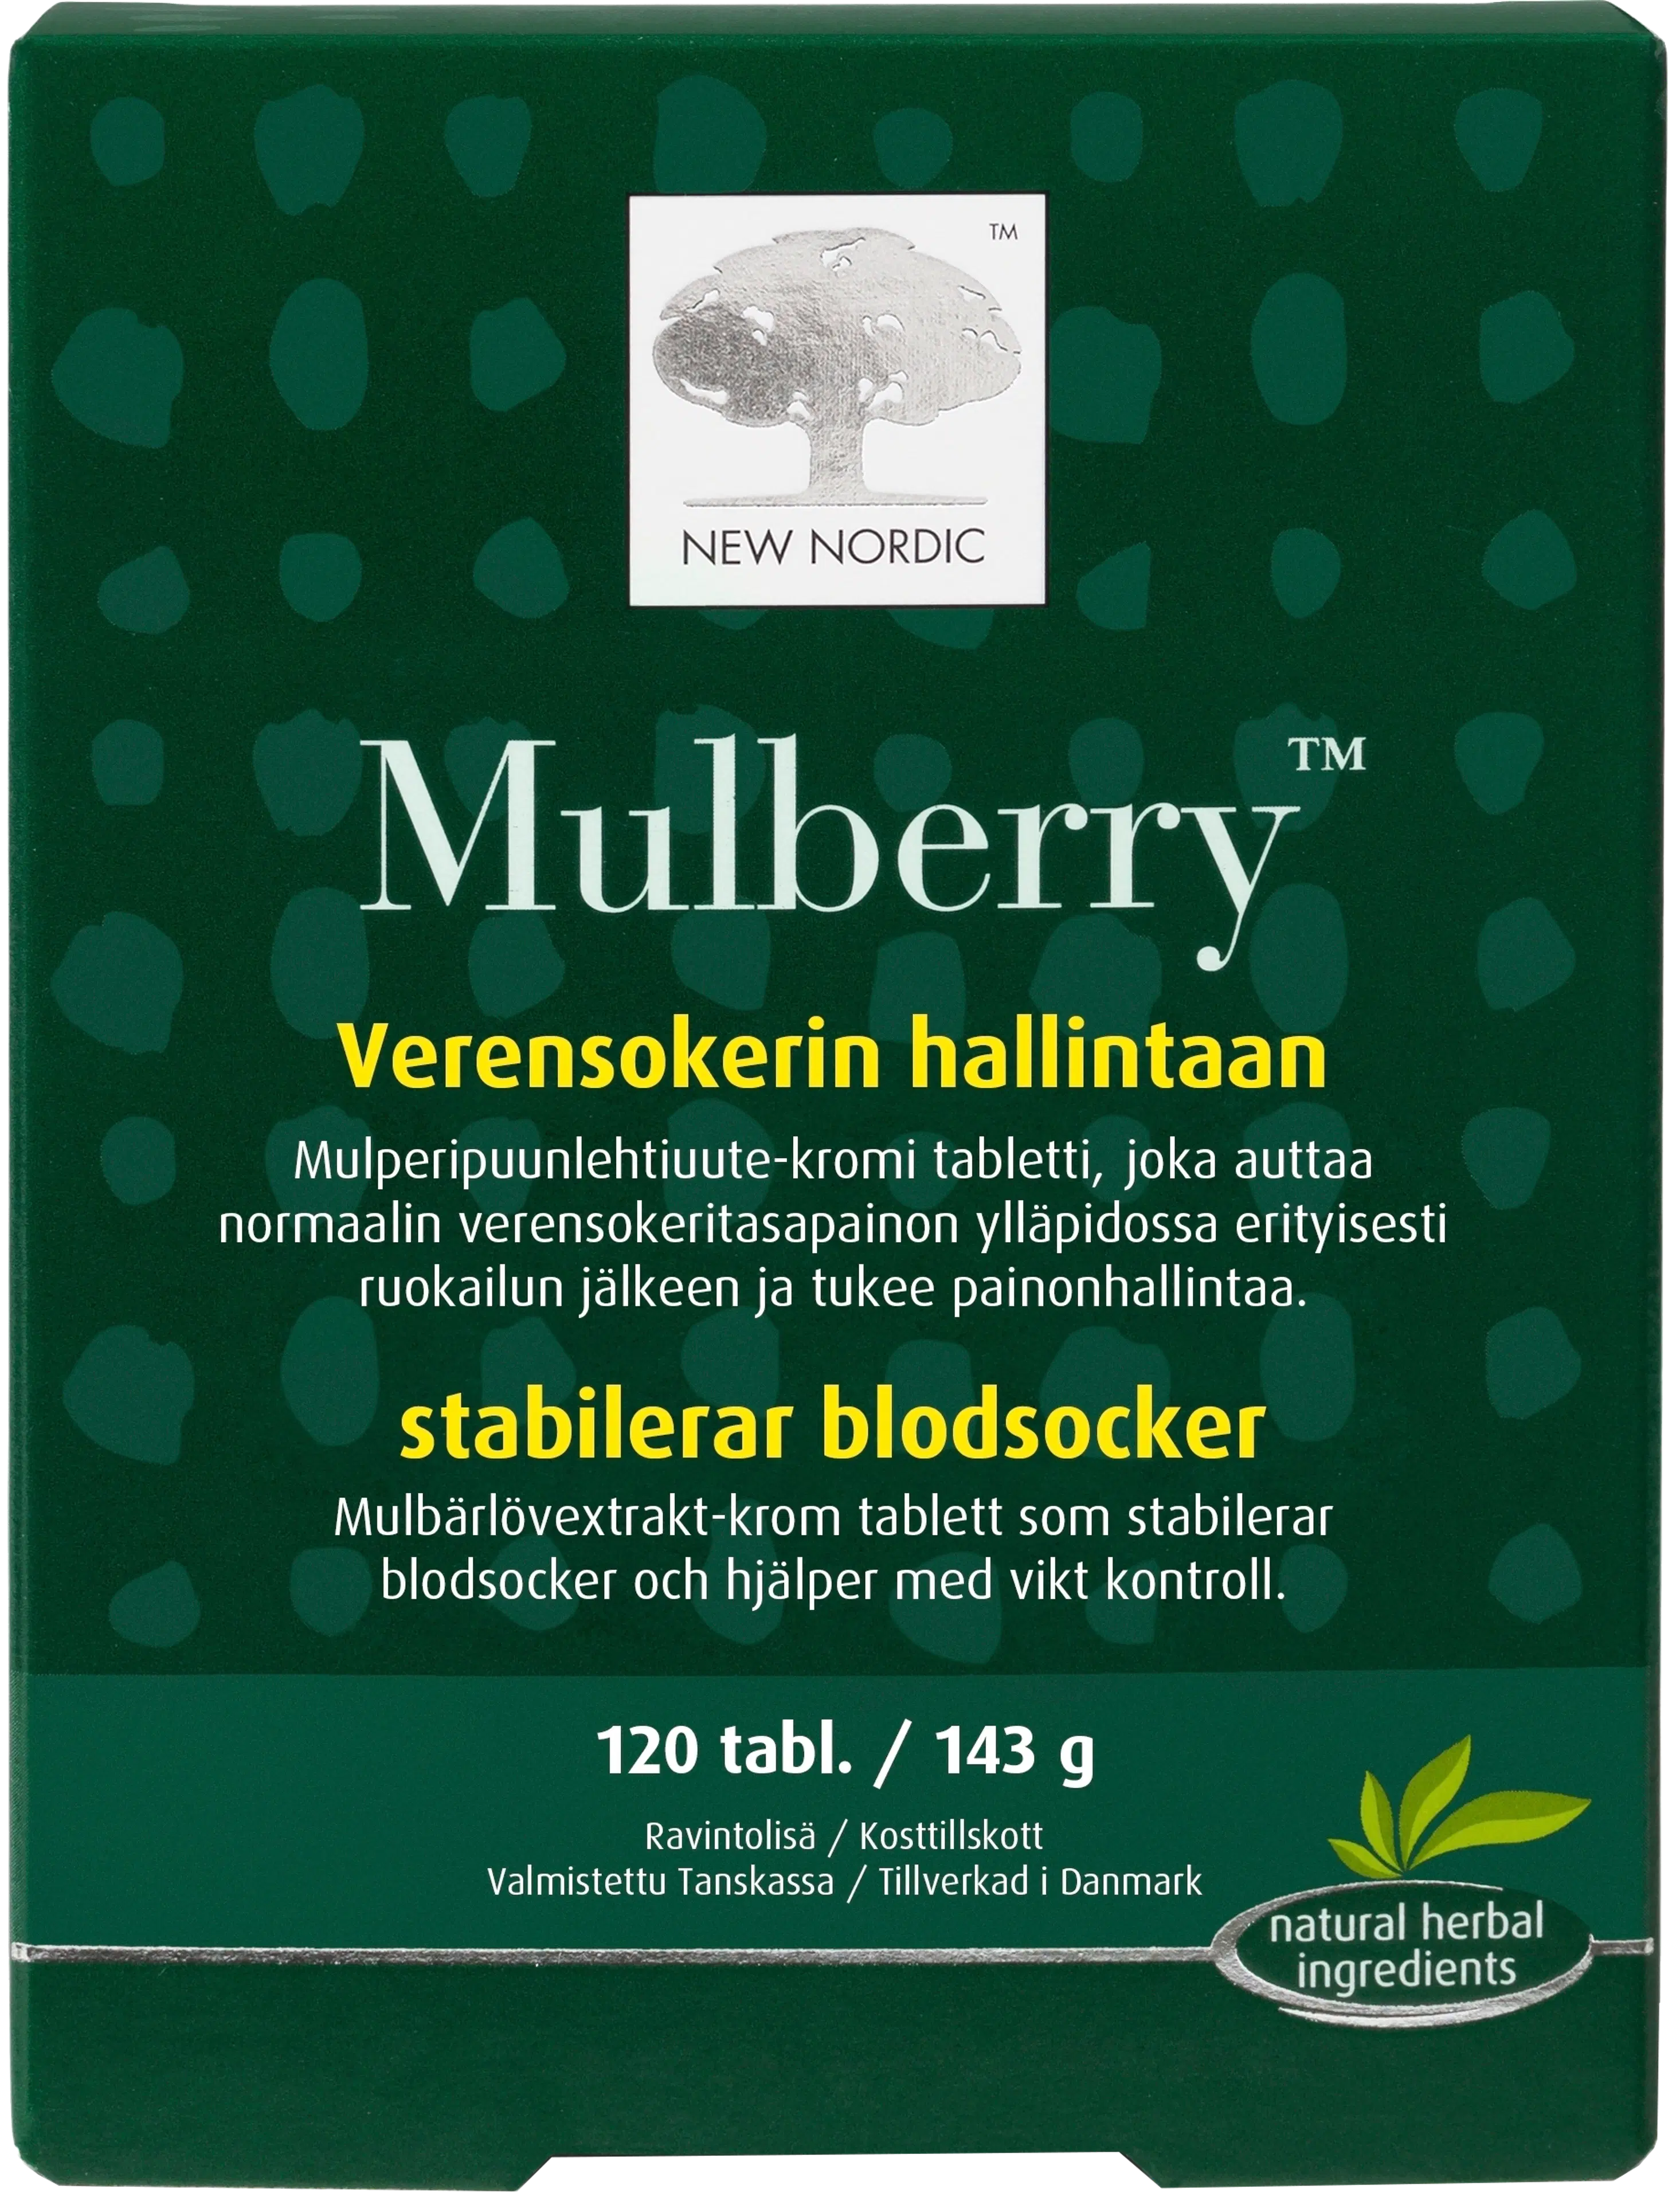 New Nordic Mulberry™ ravintolisä 120 tabl.